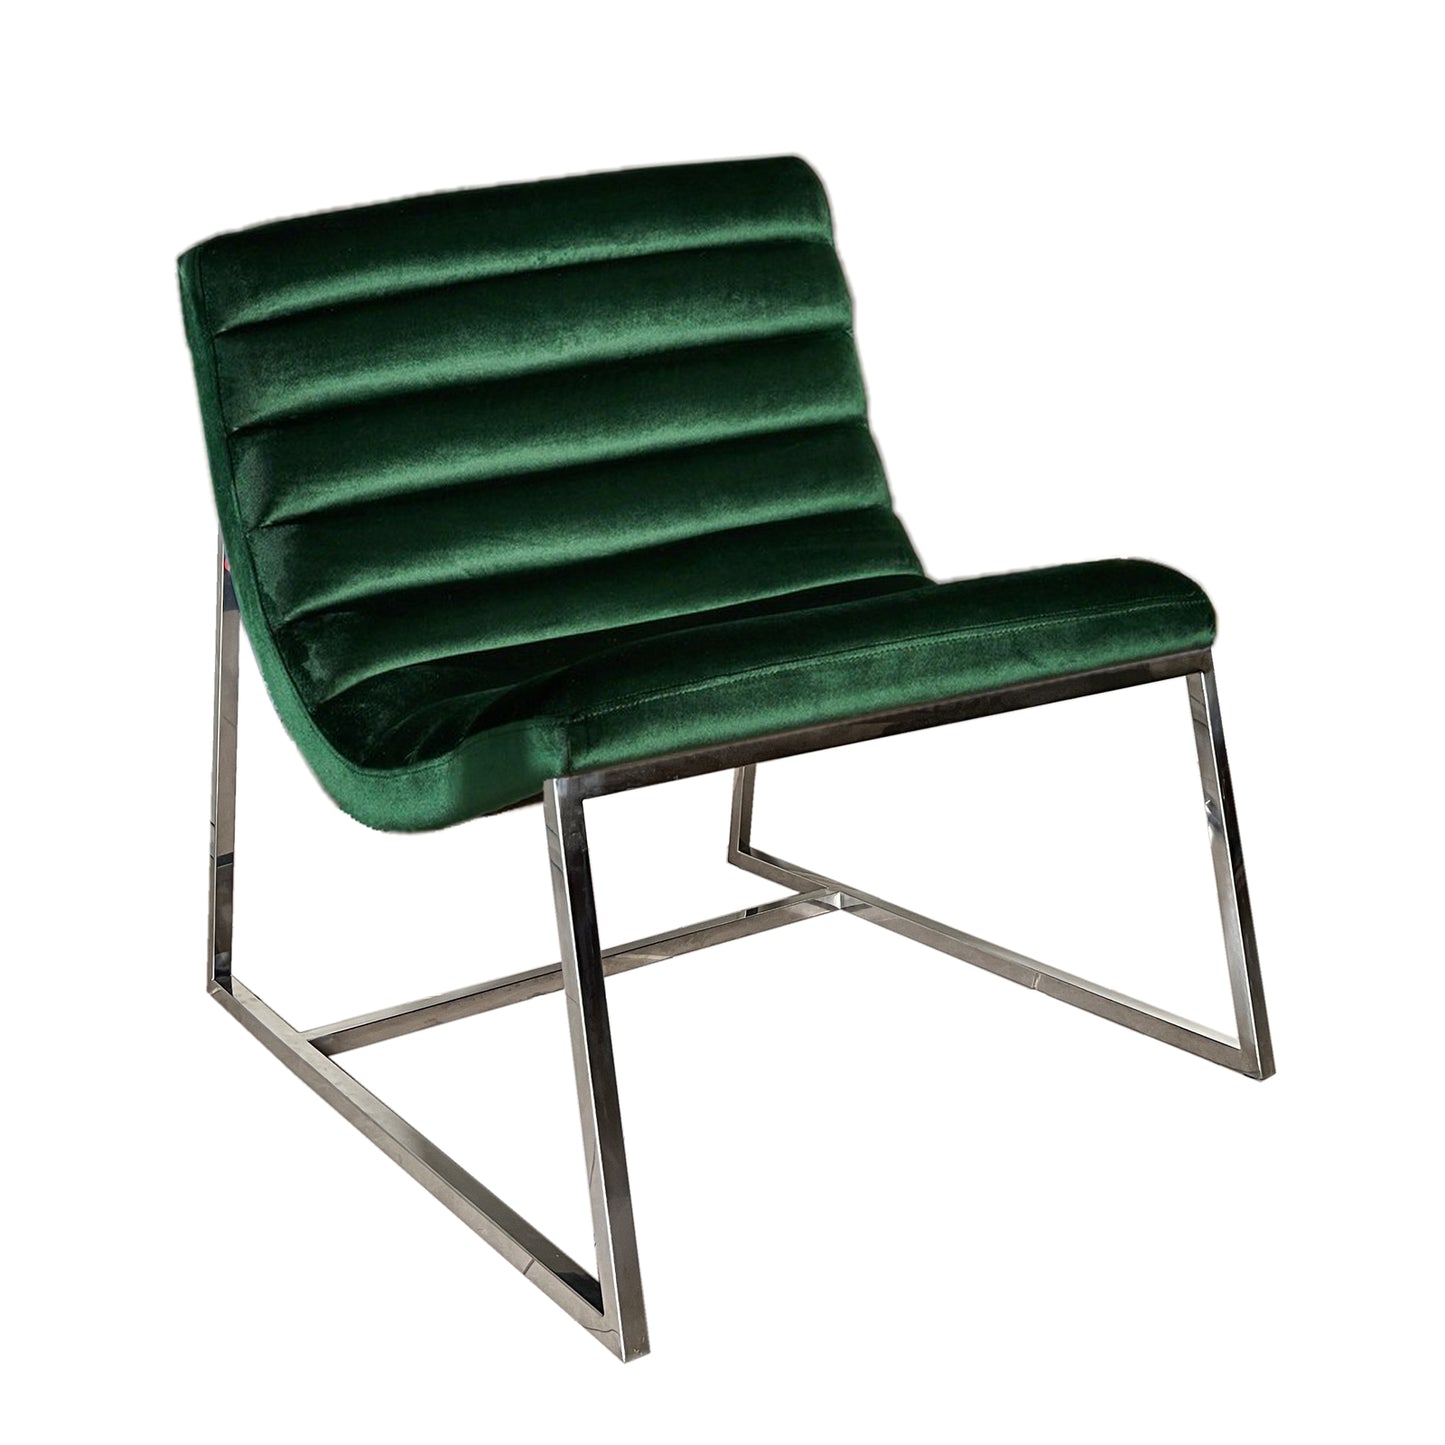 Glorie Emerald/Green Velvet Sofa Accent Chair ArmChair